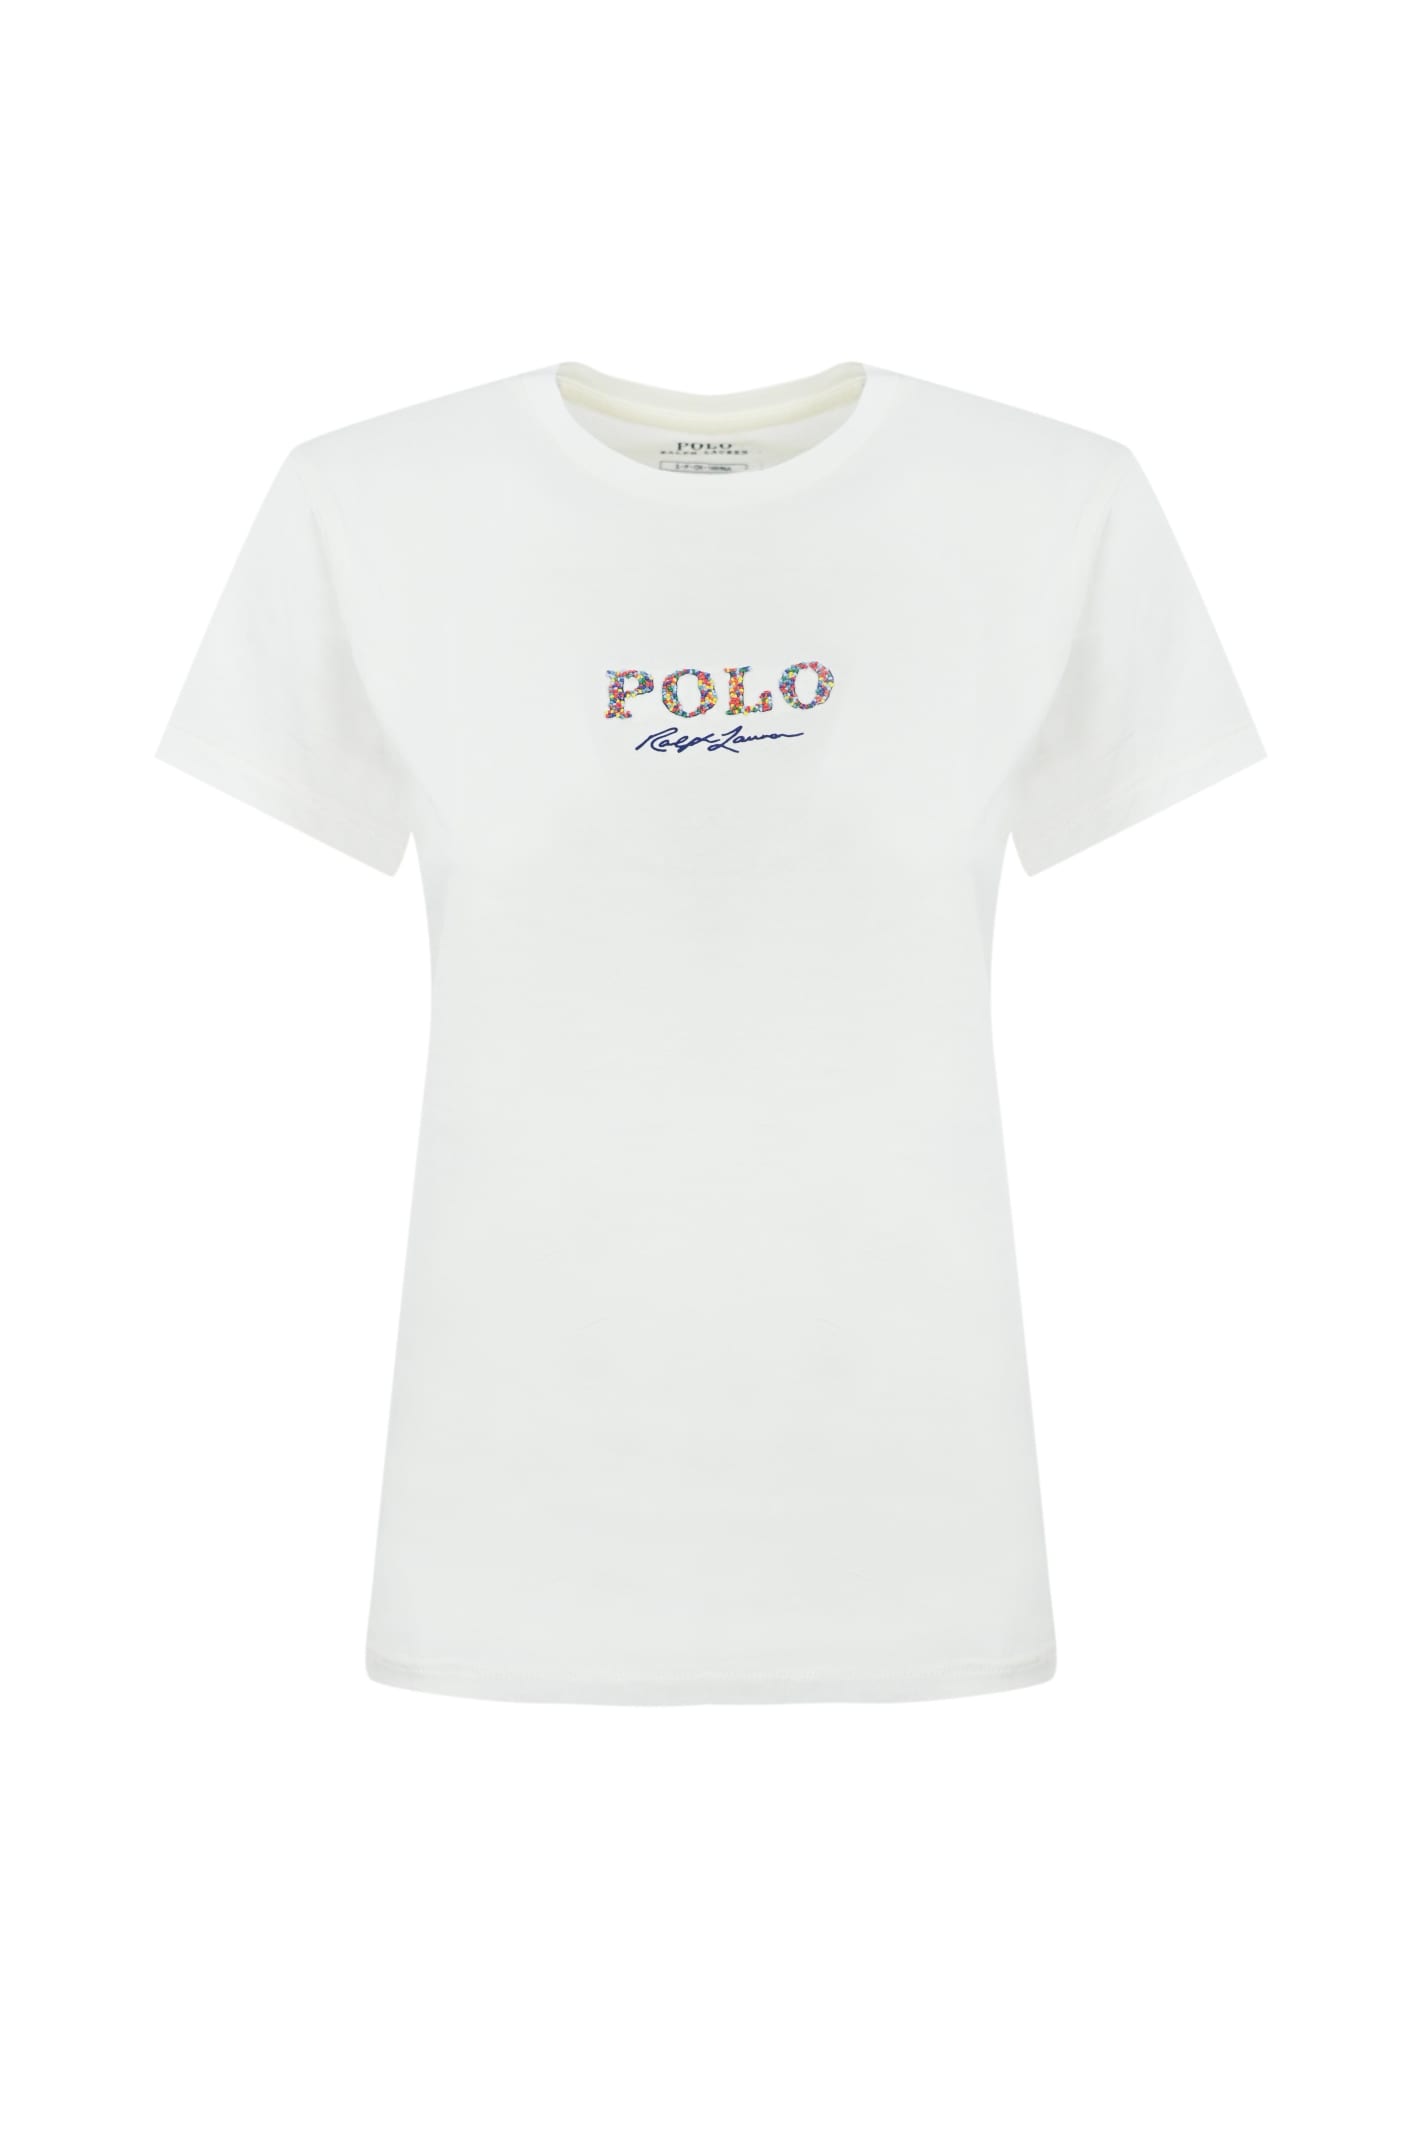 Polo Ralph Lauren Polo T-shirt